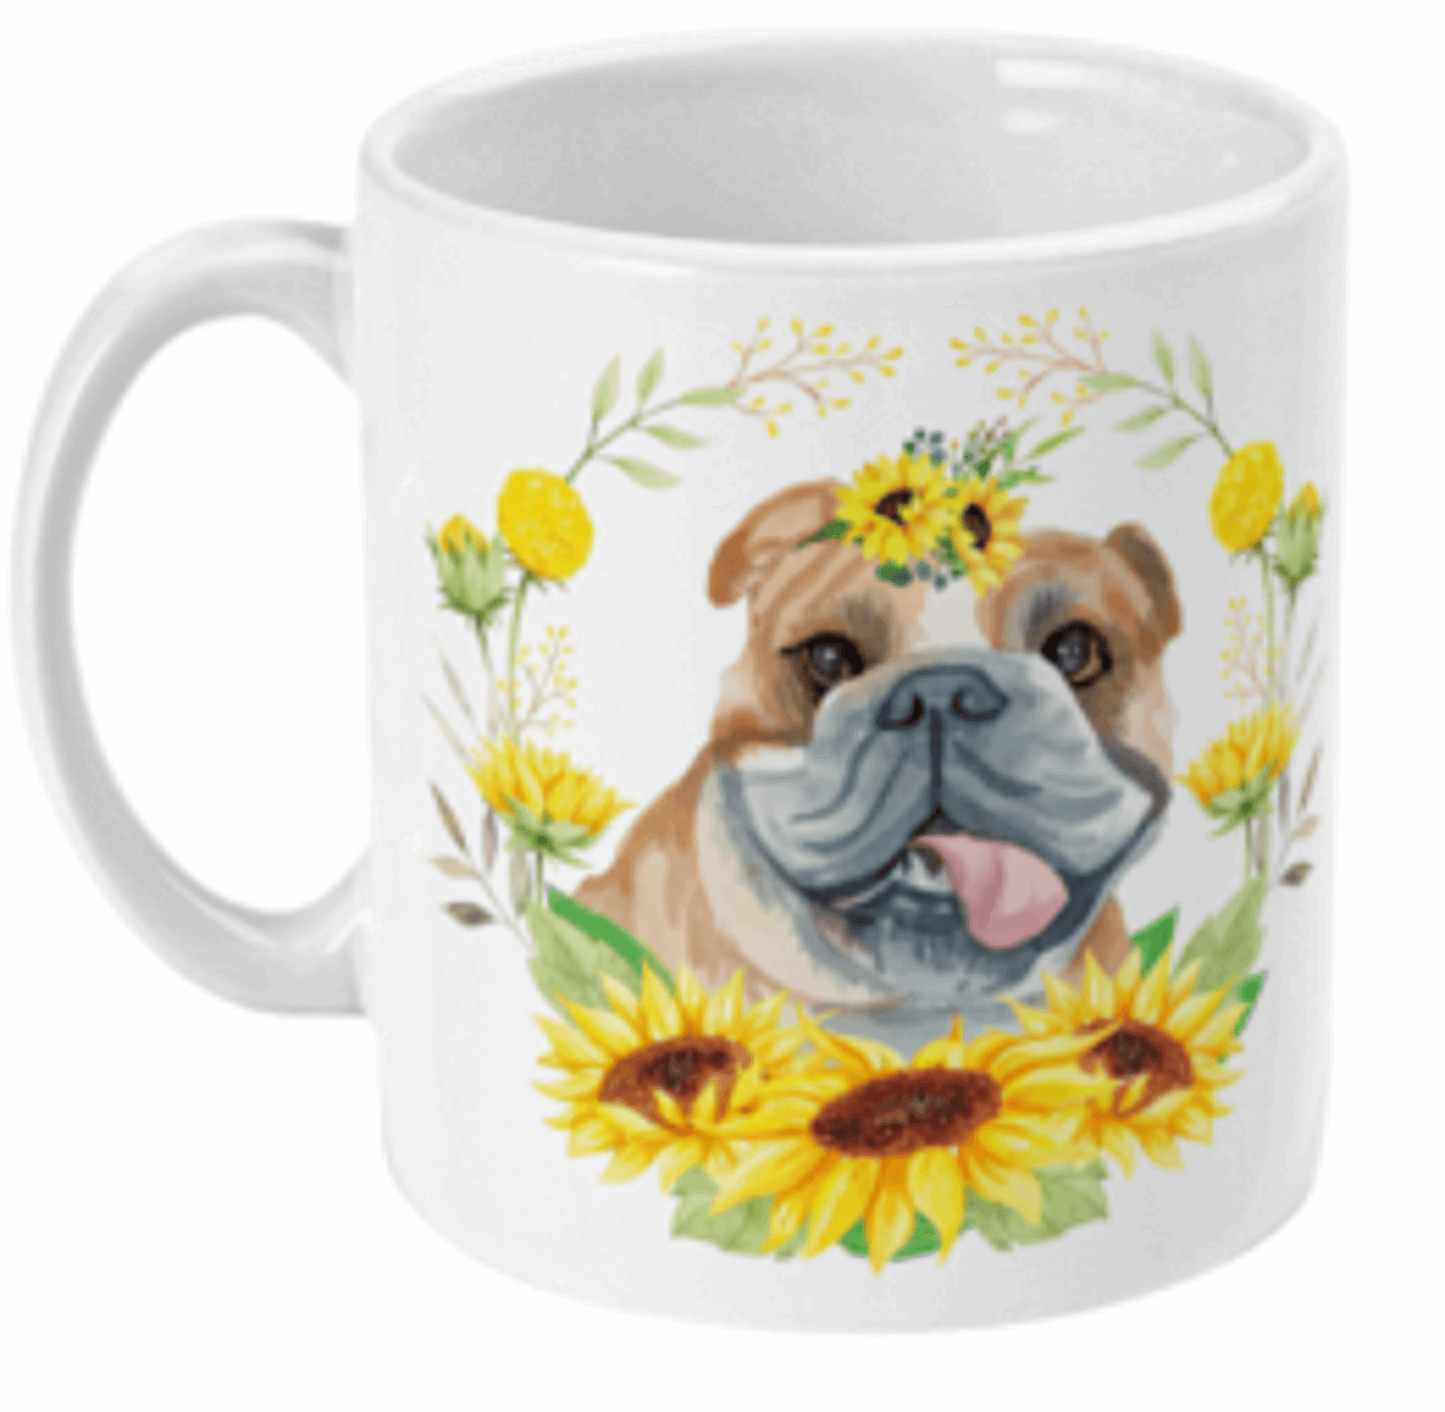  Beautiful Bulldog in Sunflower Wreath Coffee Mug by Free Spirit Accessories sold by Free Spirit Accessories